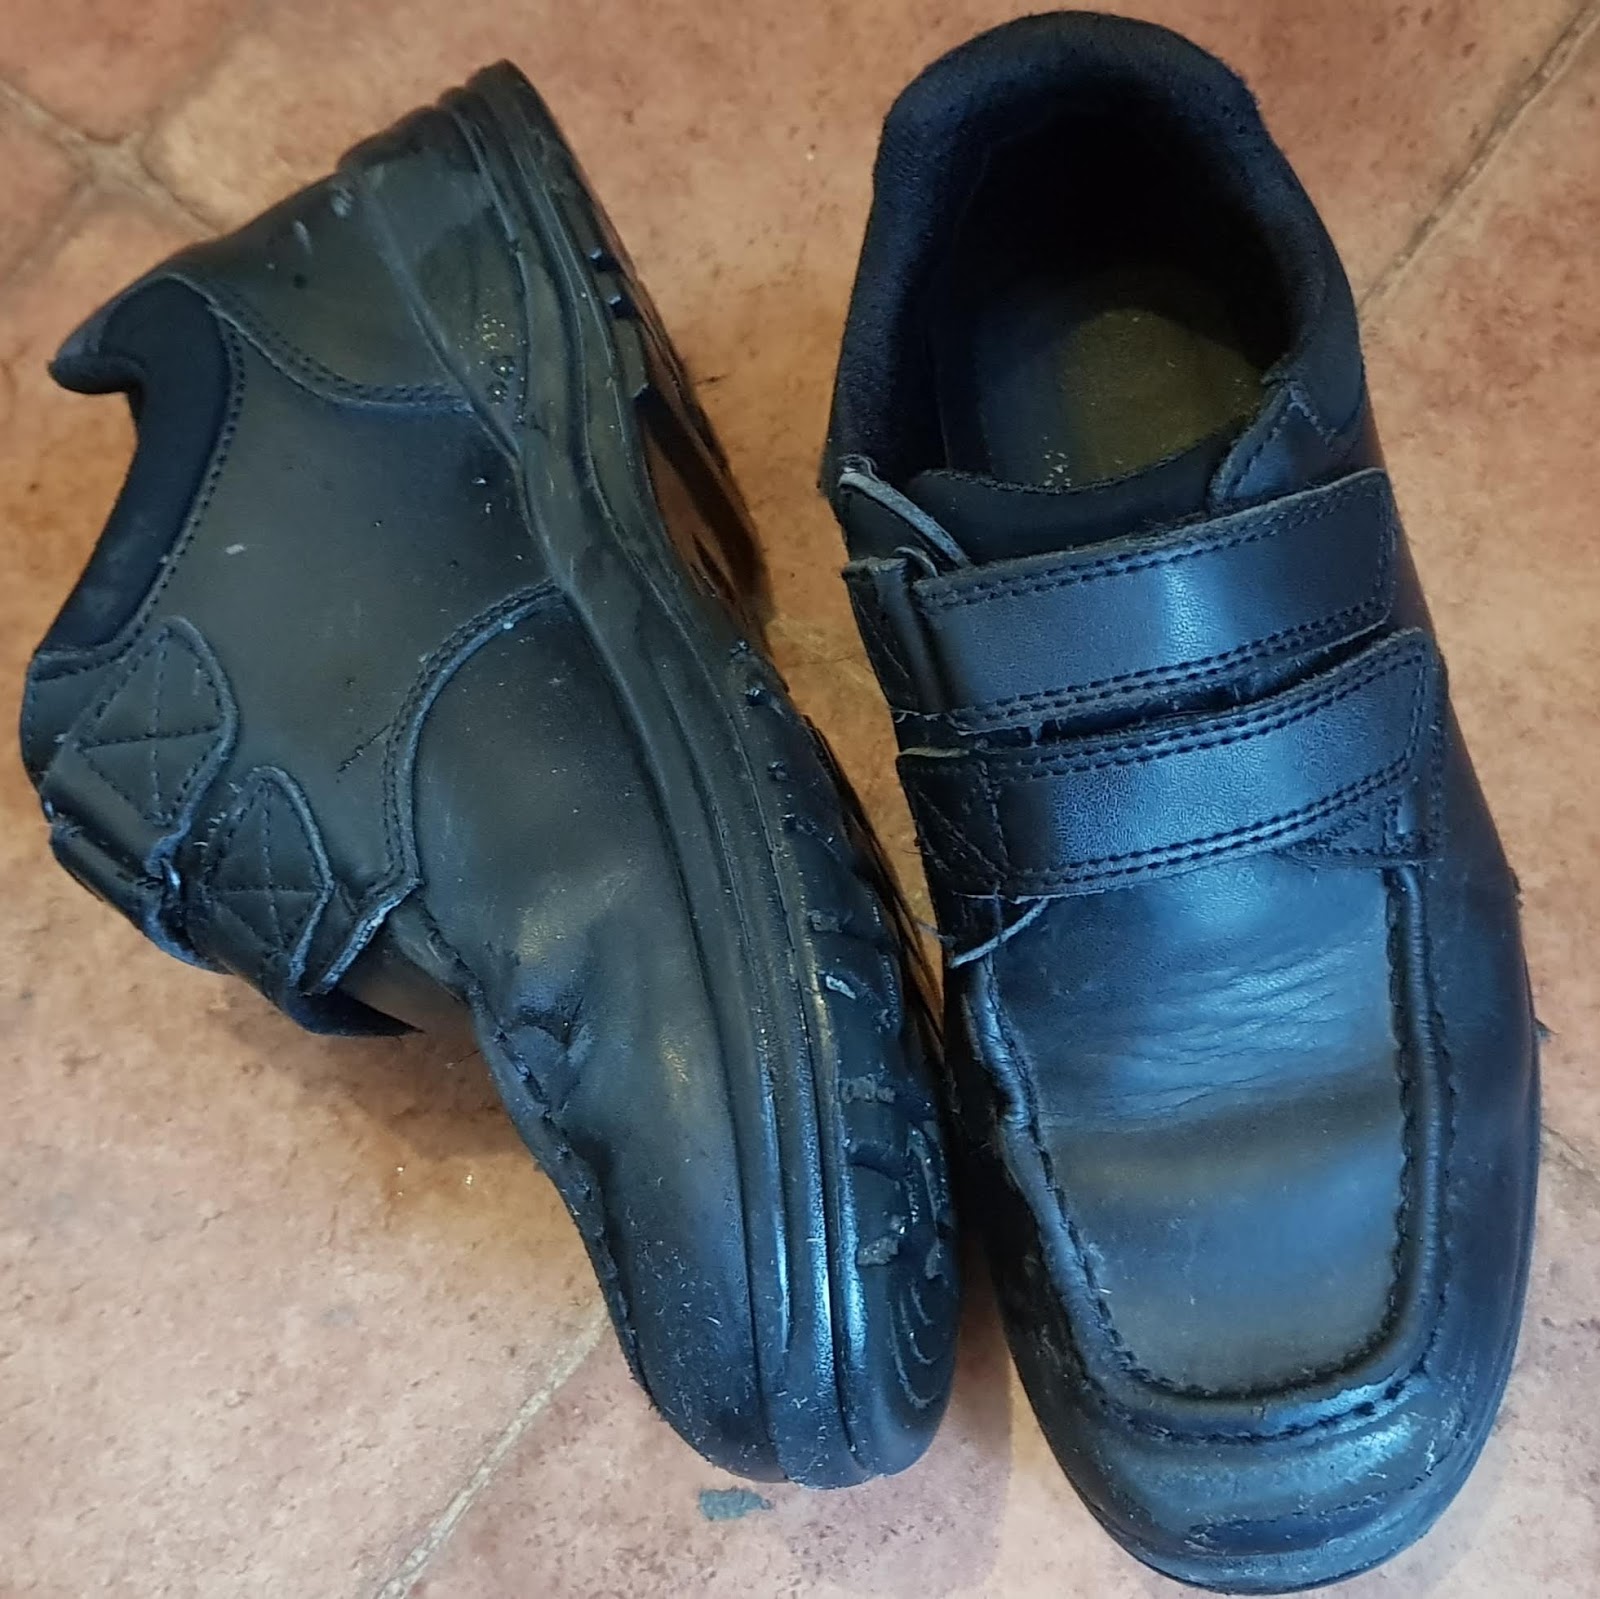 The Brick Castle: Treads Boys Black School Shoes 1 Year Guarantee Put ...